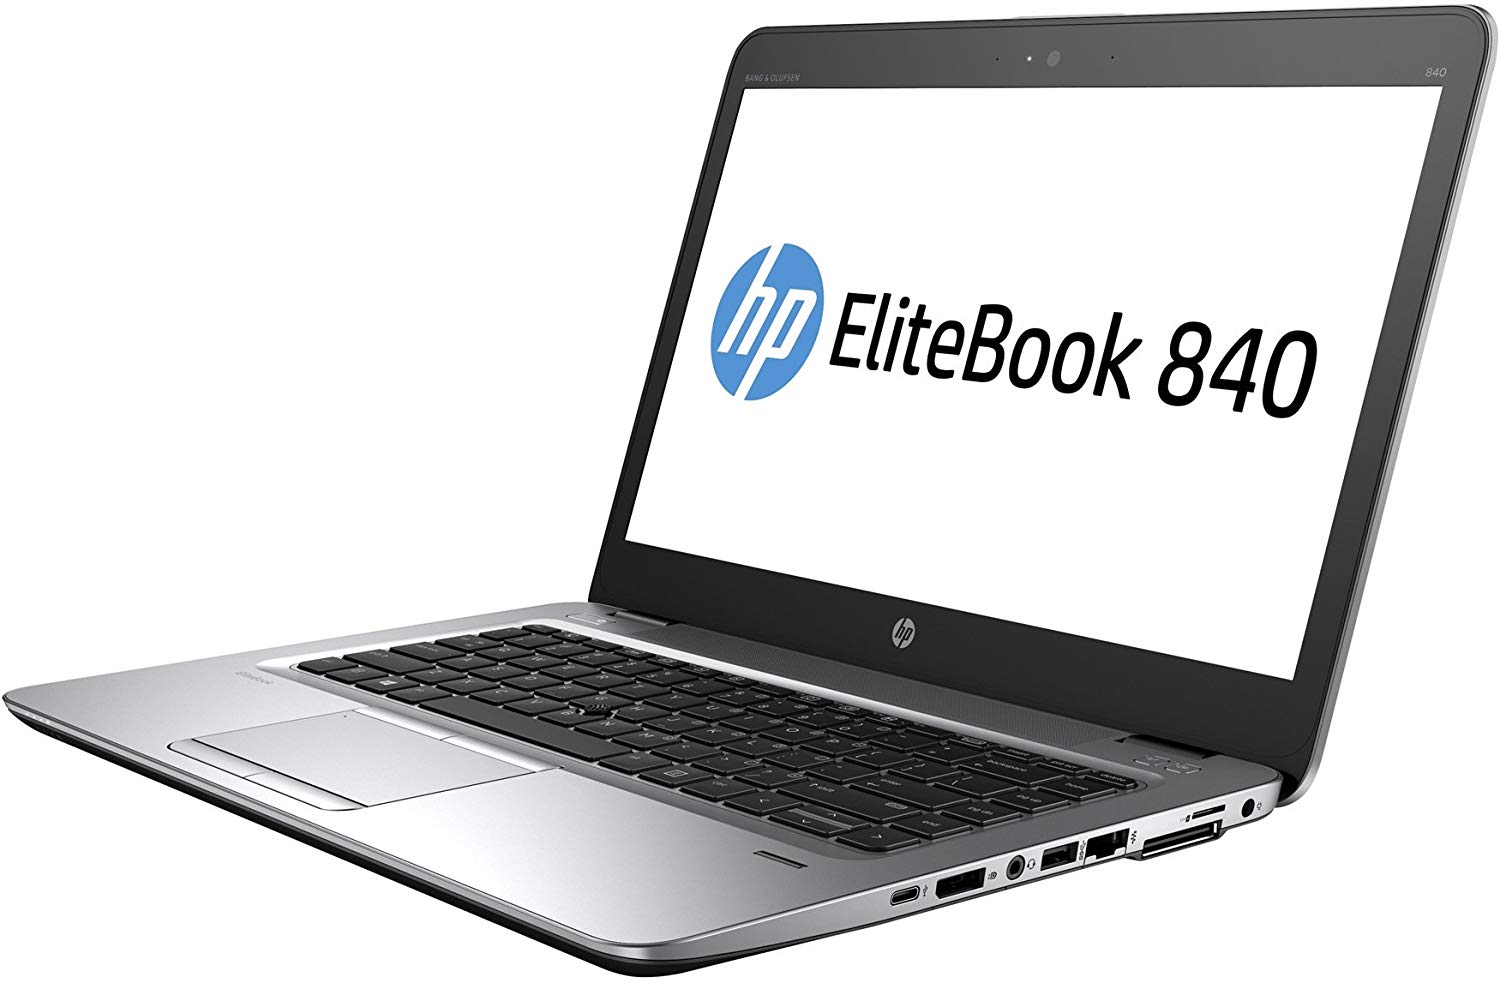 HP Elitebook 840 G1 laptop